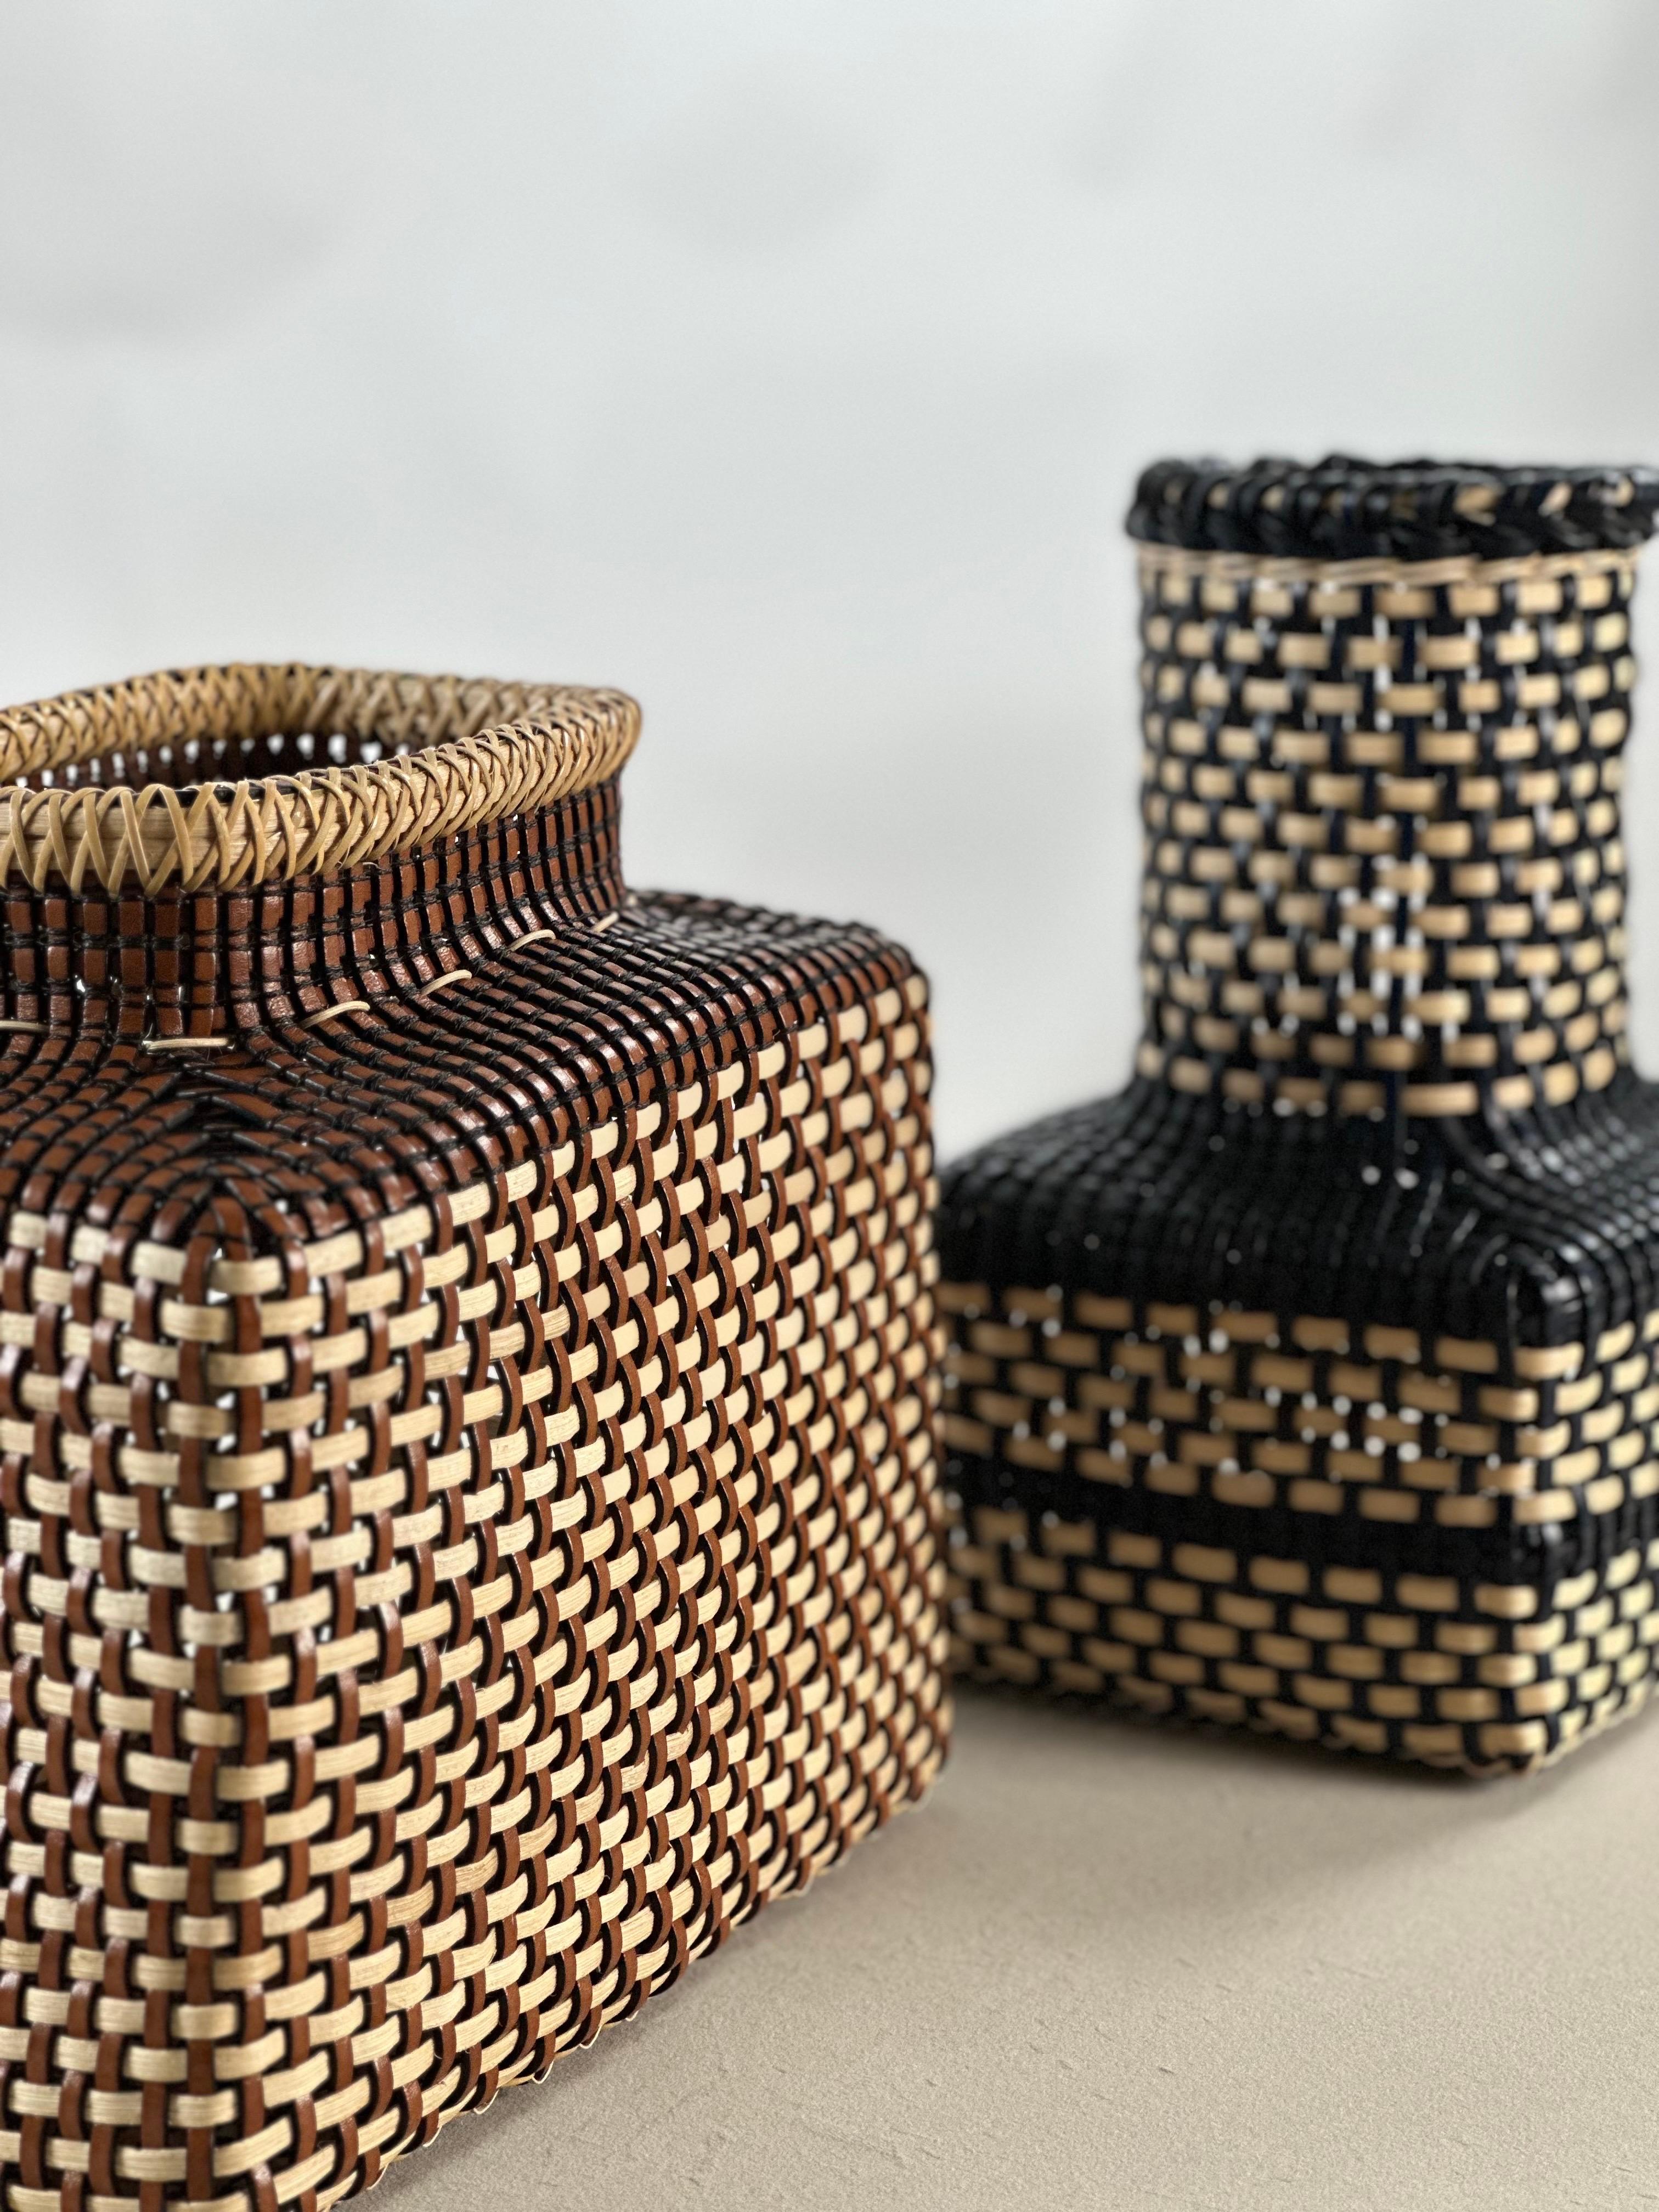 Japanese Ikebana Inspired Leather & Cane Handmade Basket Cognac Off White Color For Sale 1